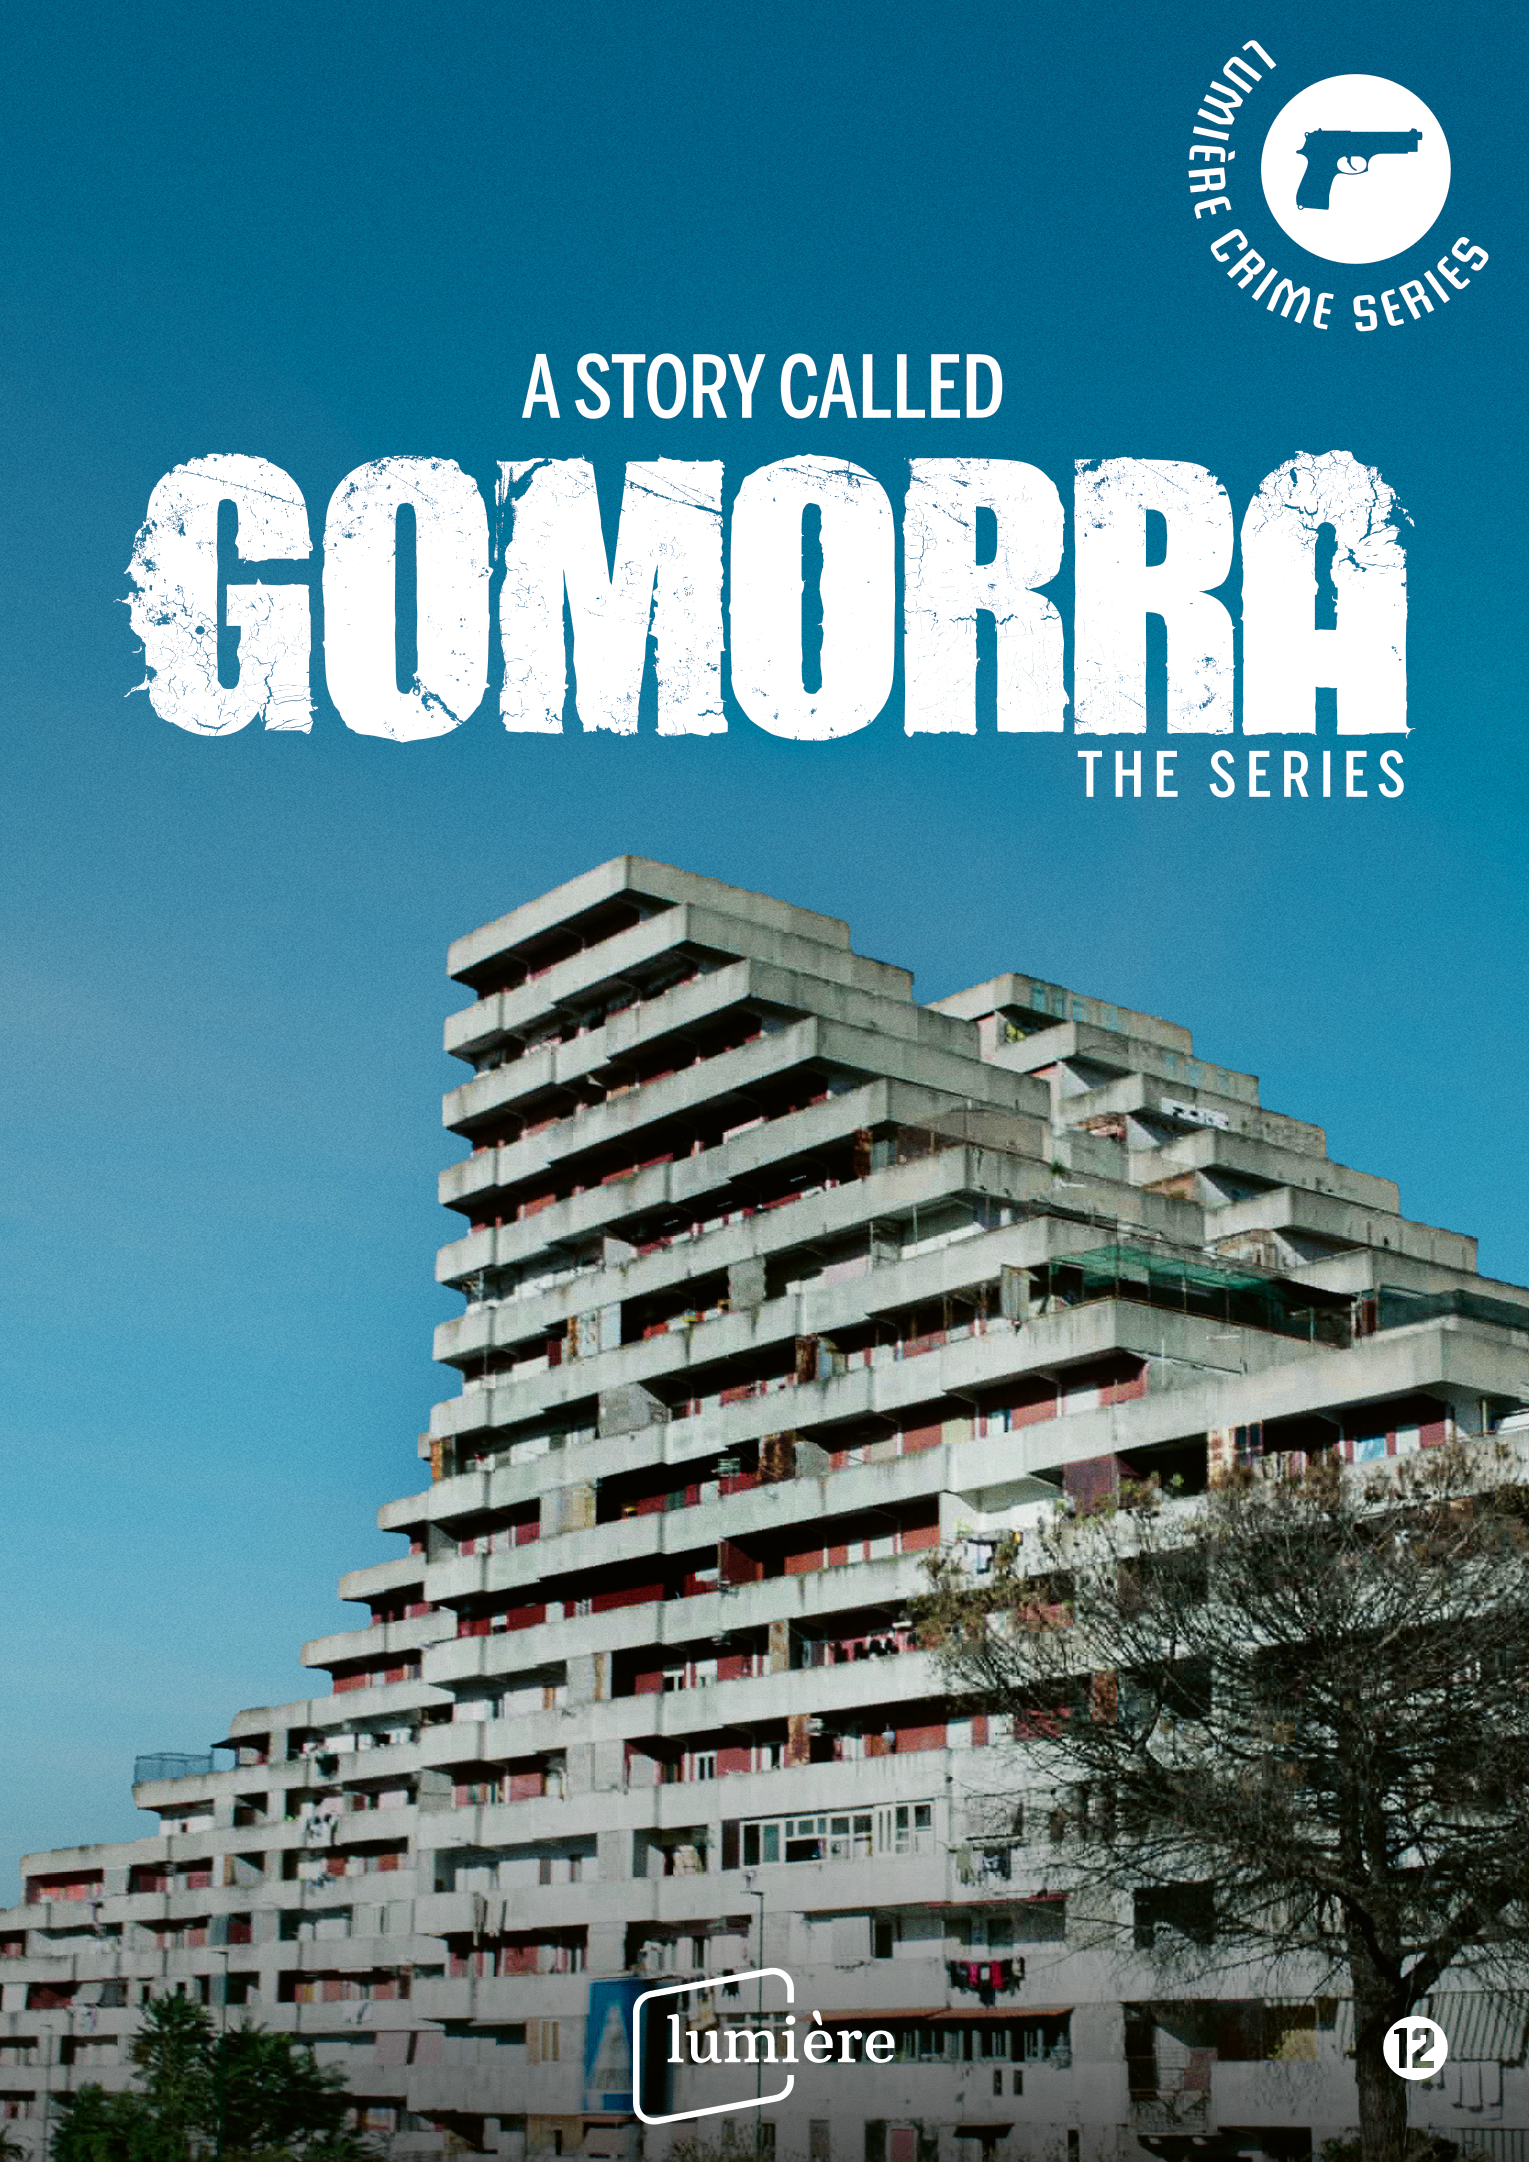 A Story Called Gomorra